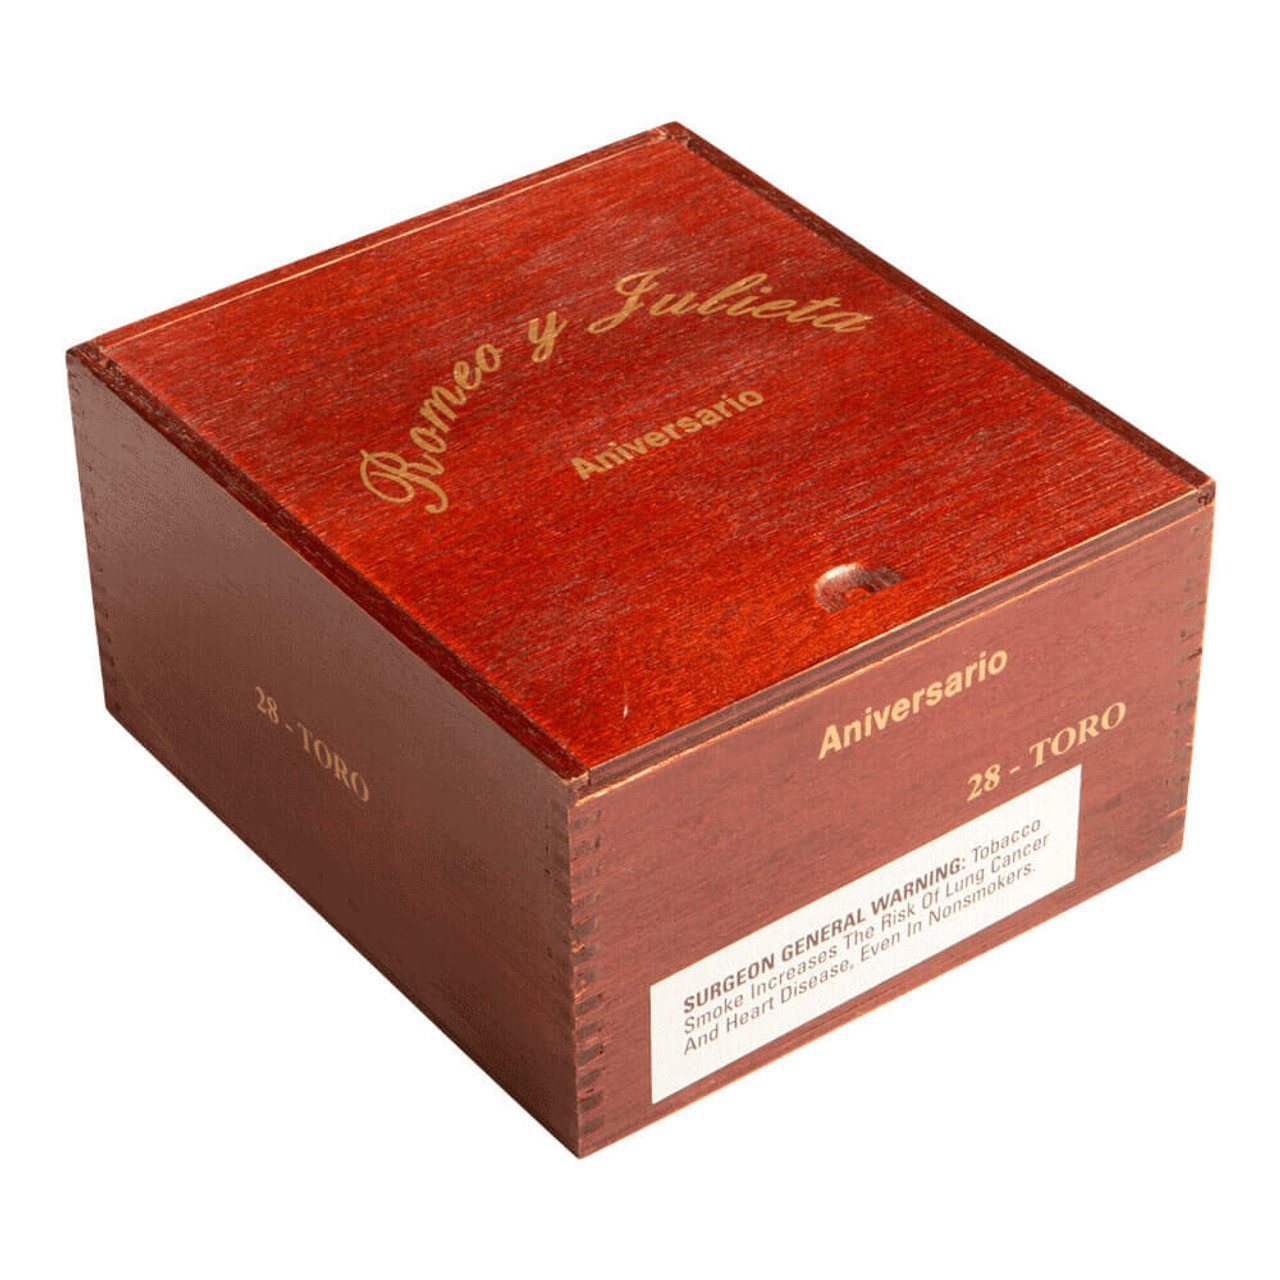 Romeo y Julieta Aniversario Toro Cigars - 6 x 54 (Cedar Chest of 28) *Box